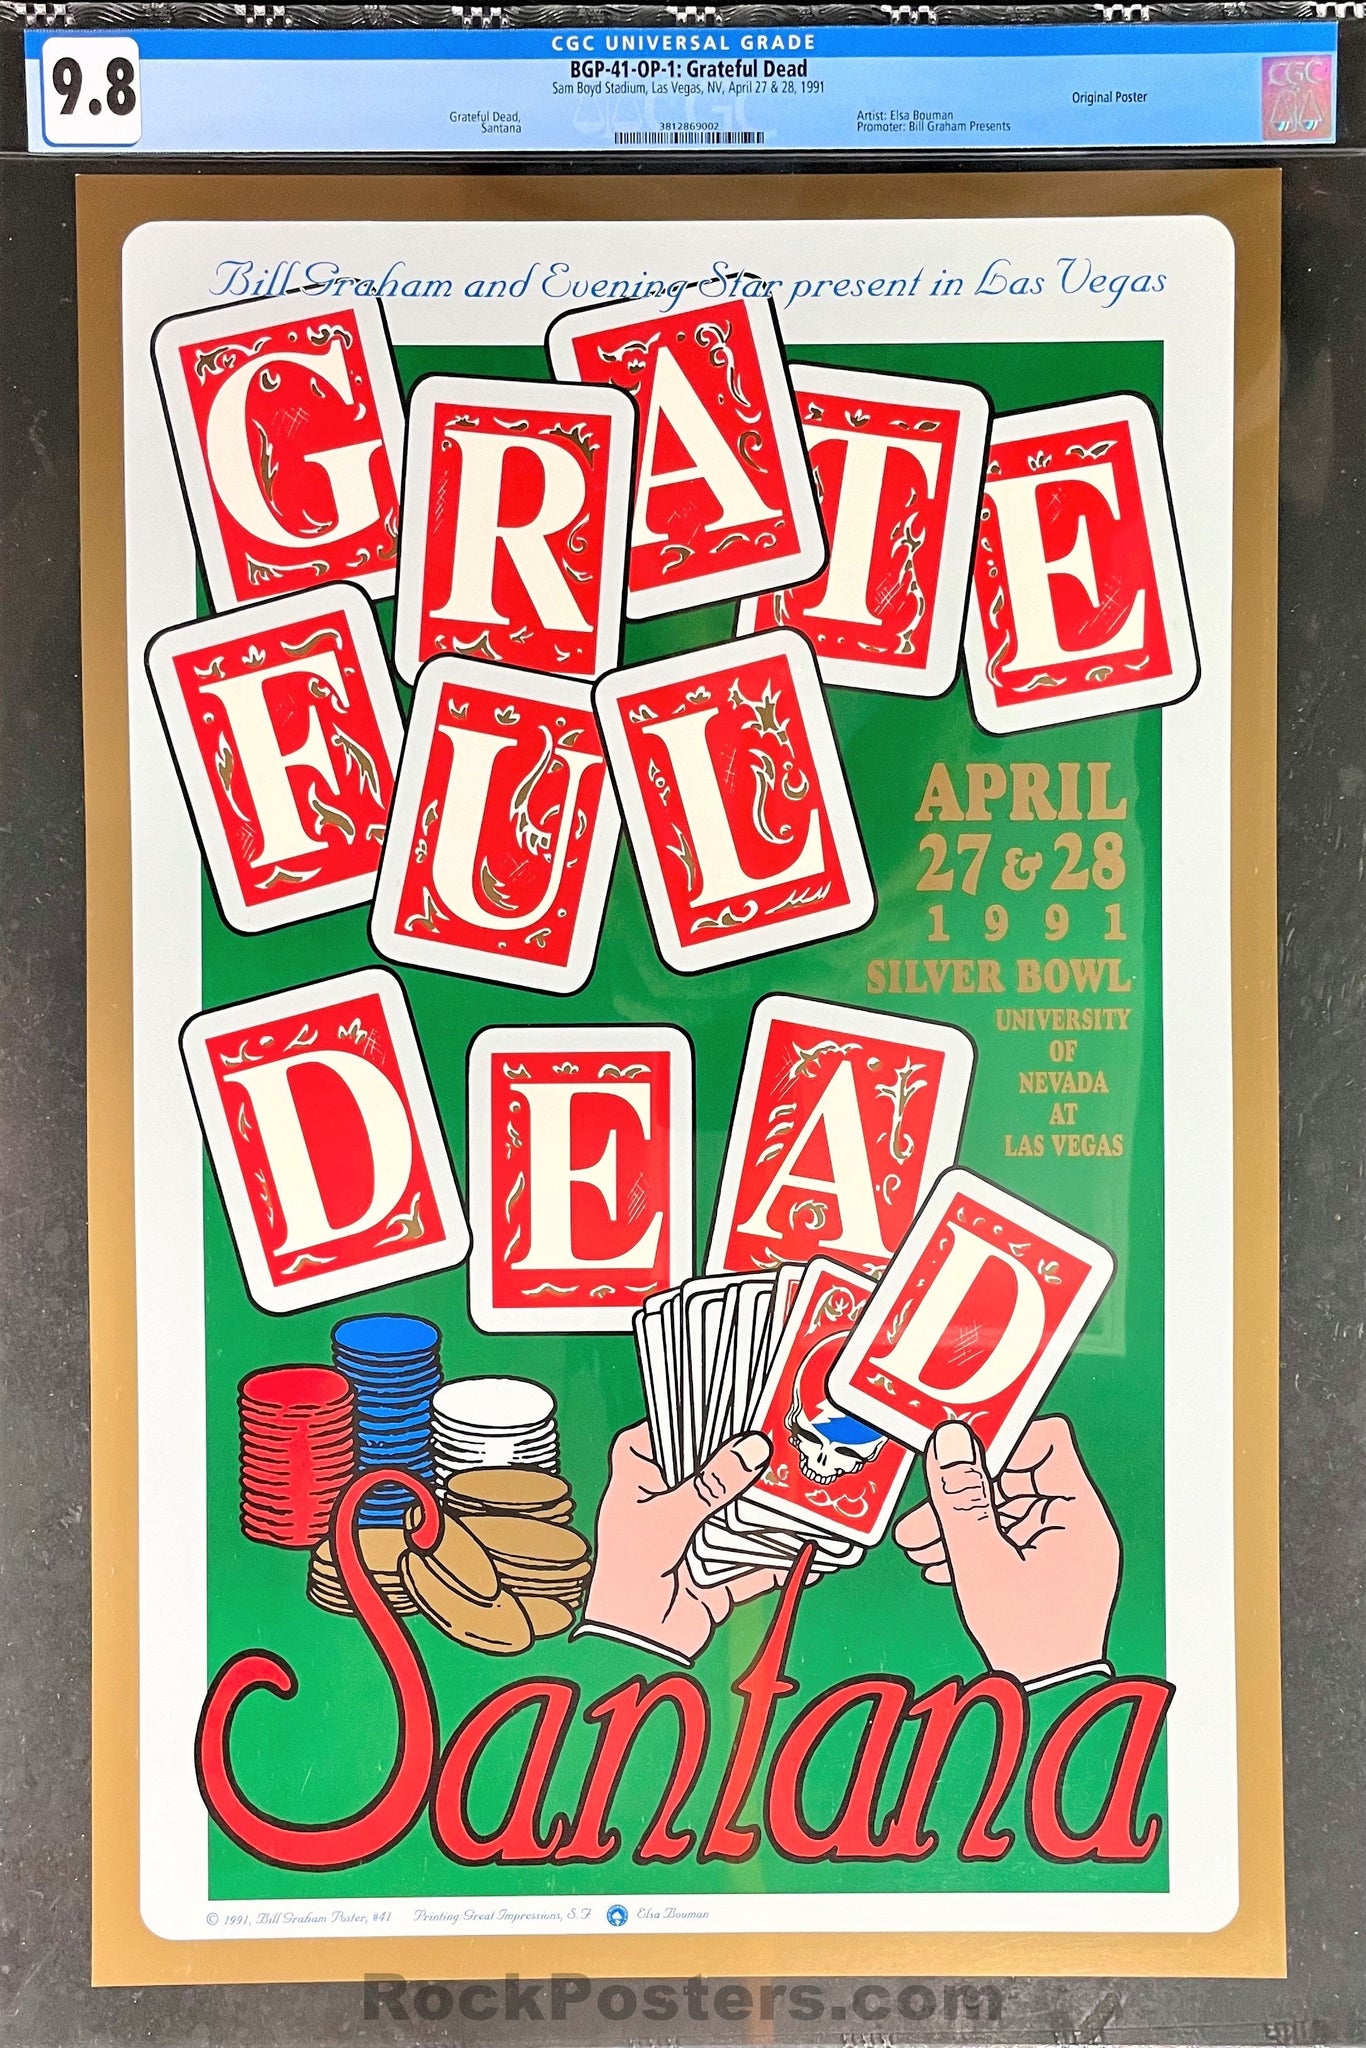 AUCTION - BGP-41 - Grateful Dead Santana - 1992  Poster - Las Vegas - CGC Graded 9.8